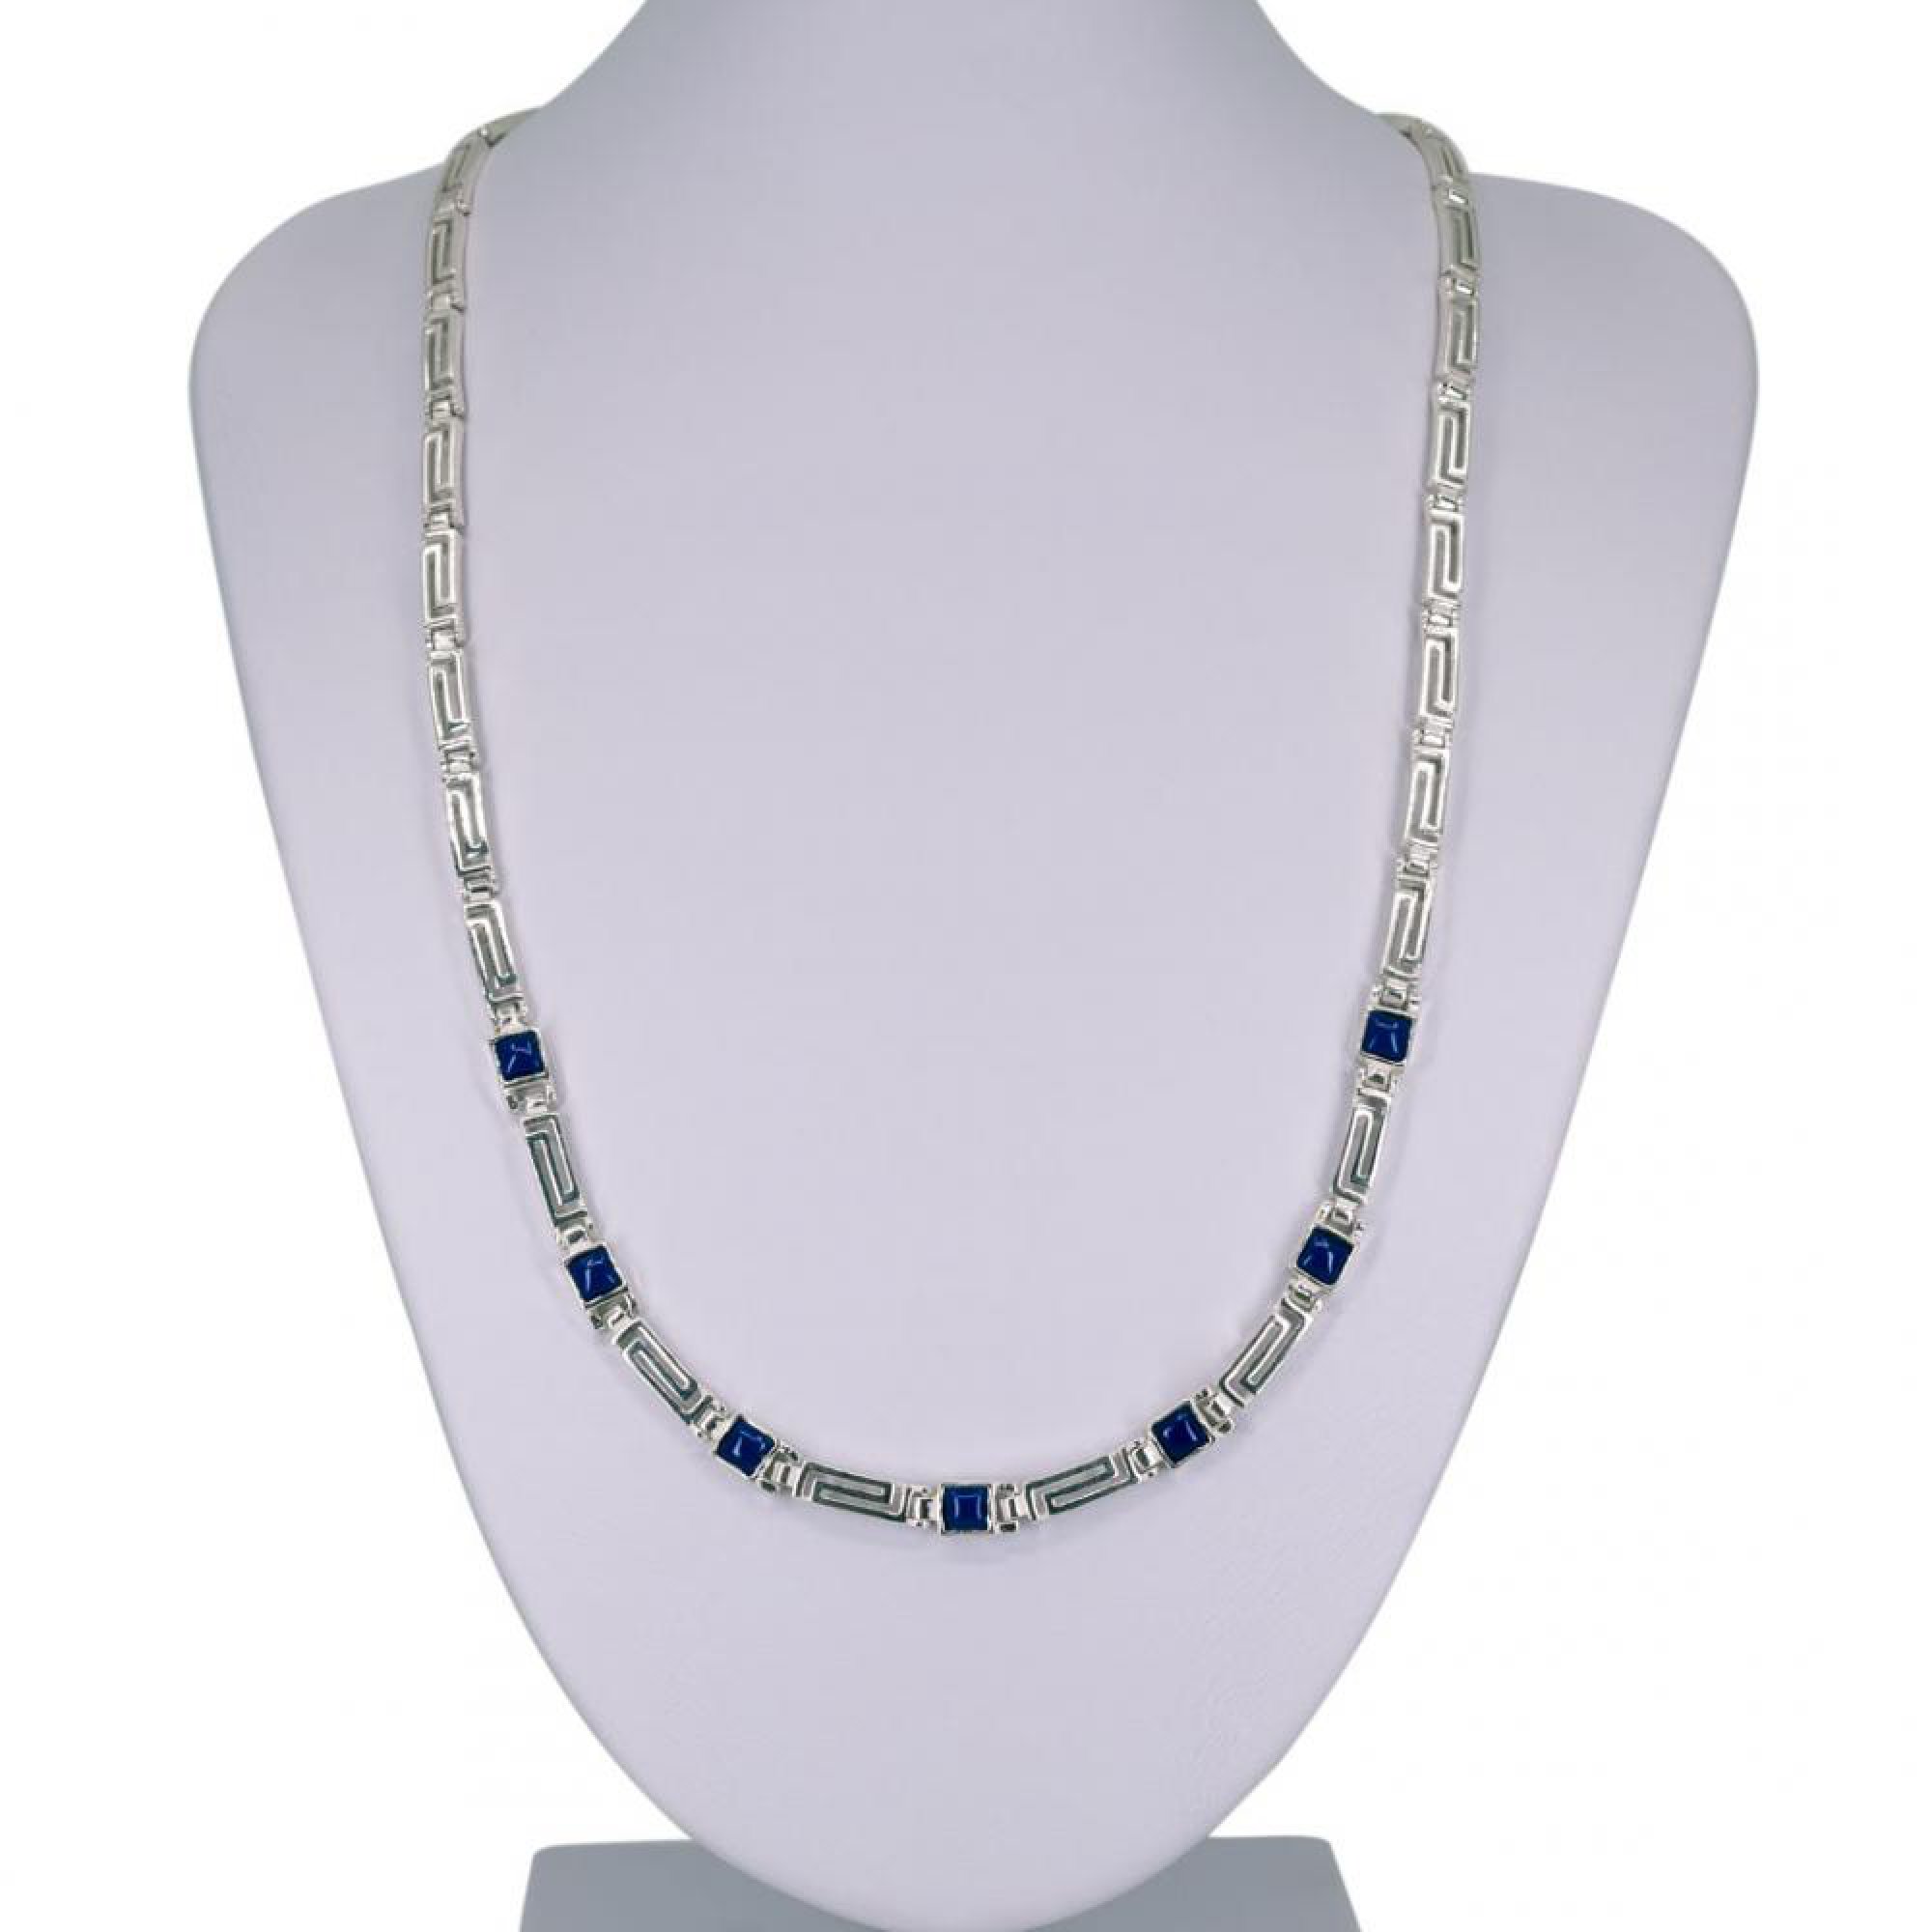 Meander necklace with lapis lazuli stones